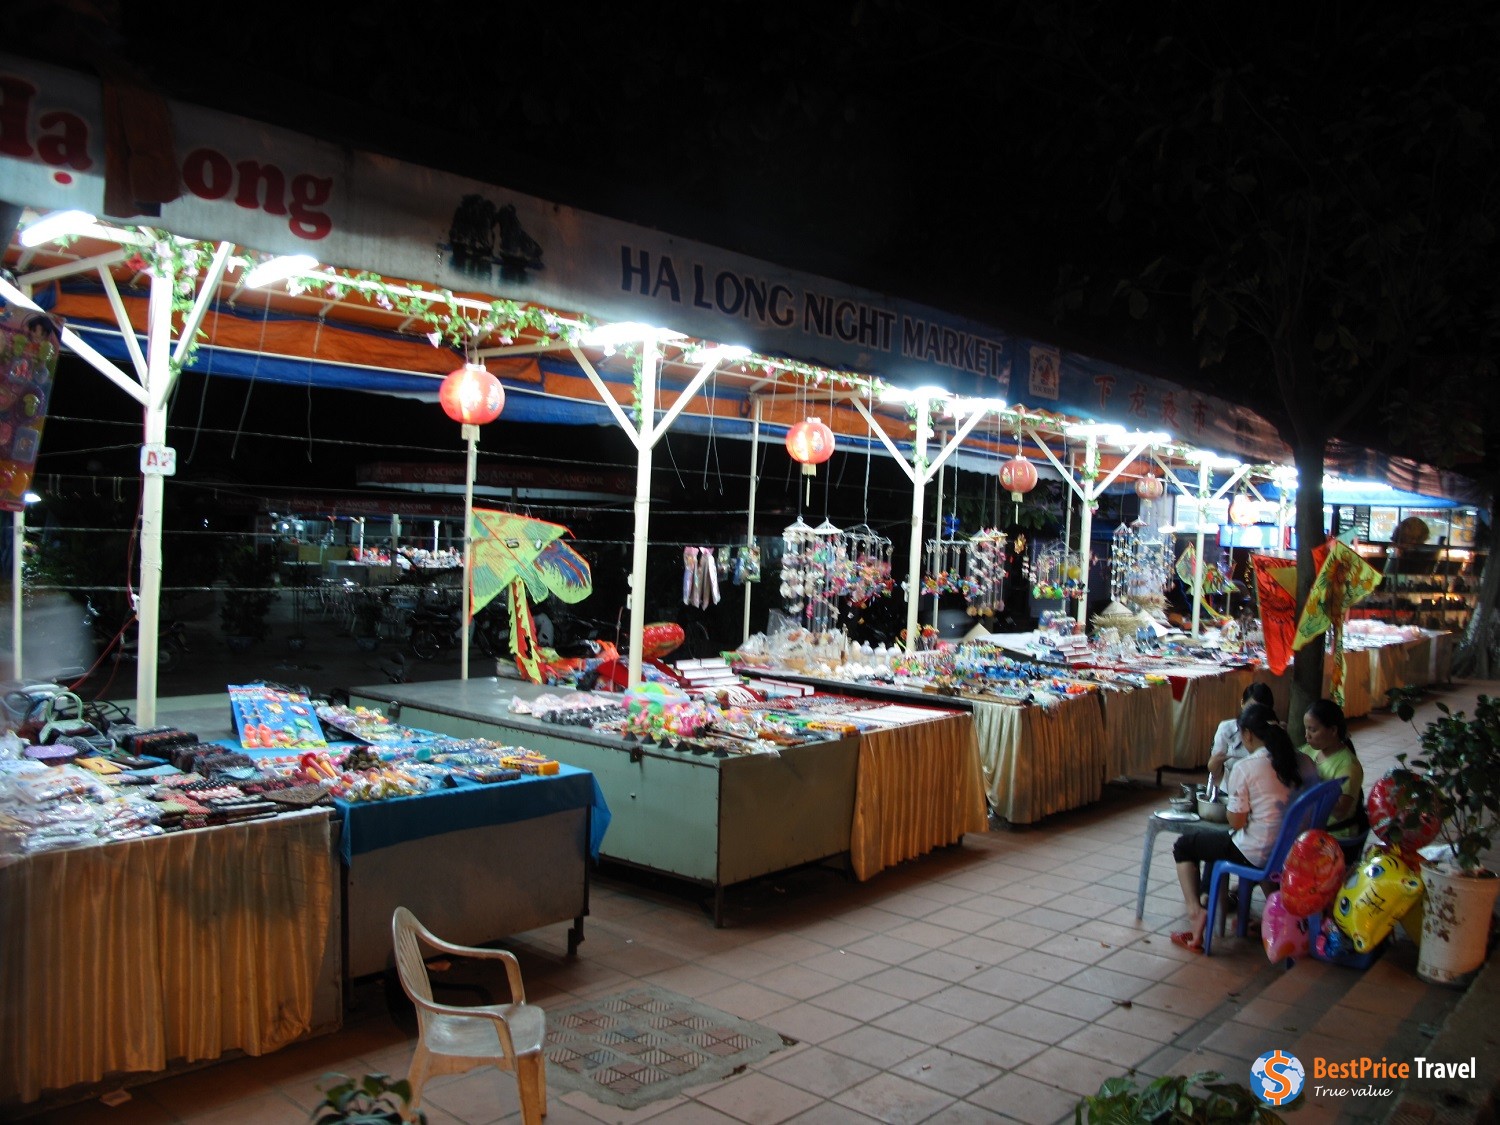 A corner of Ha Long Night Market